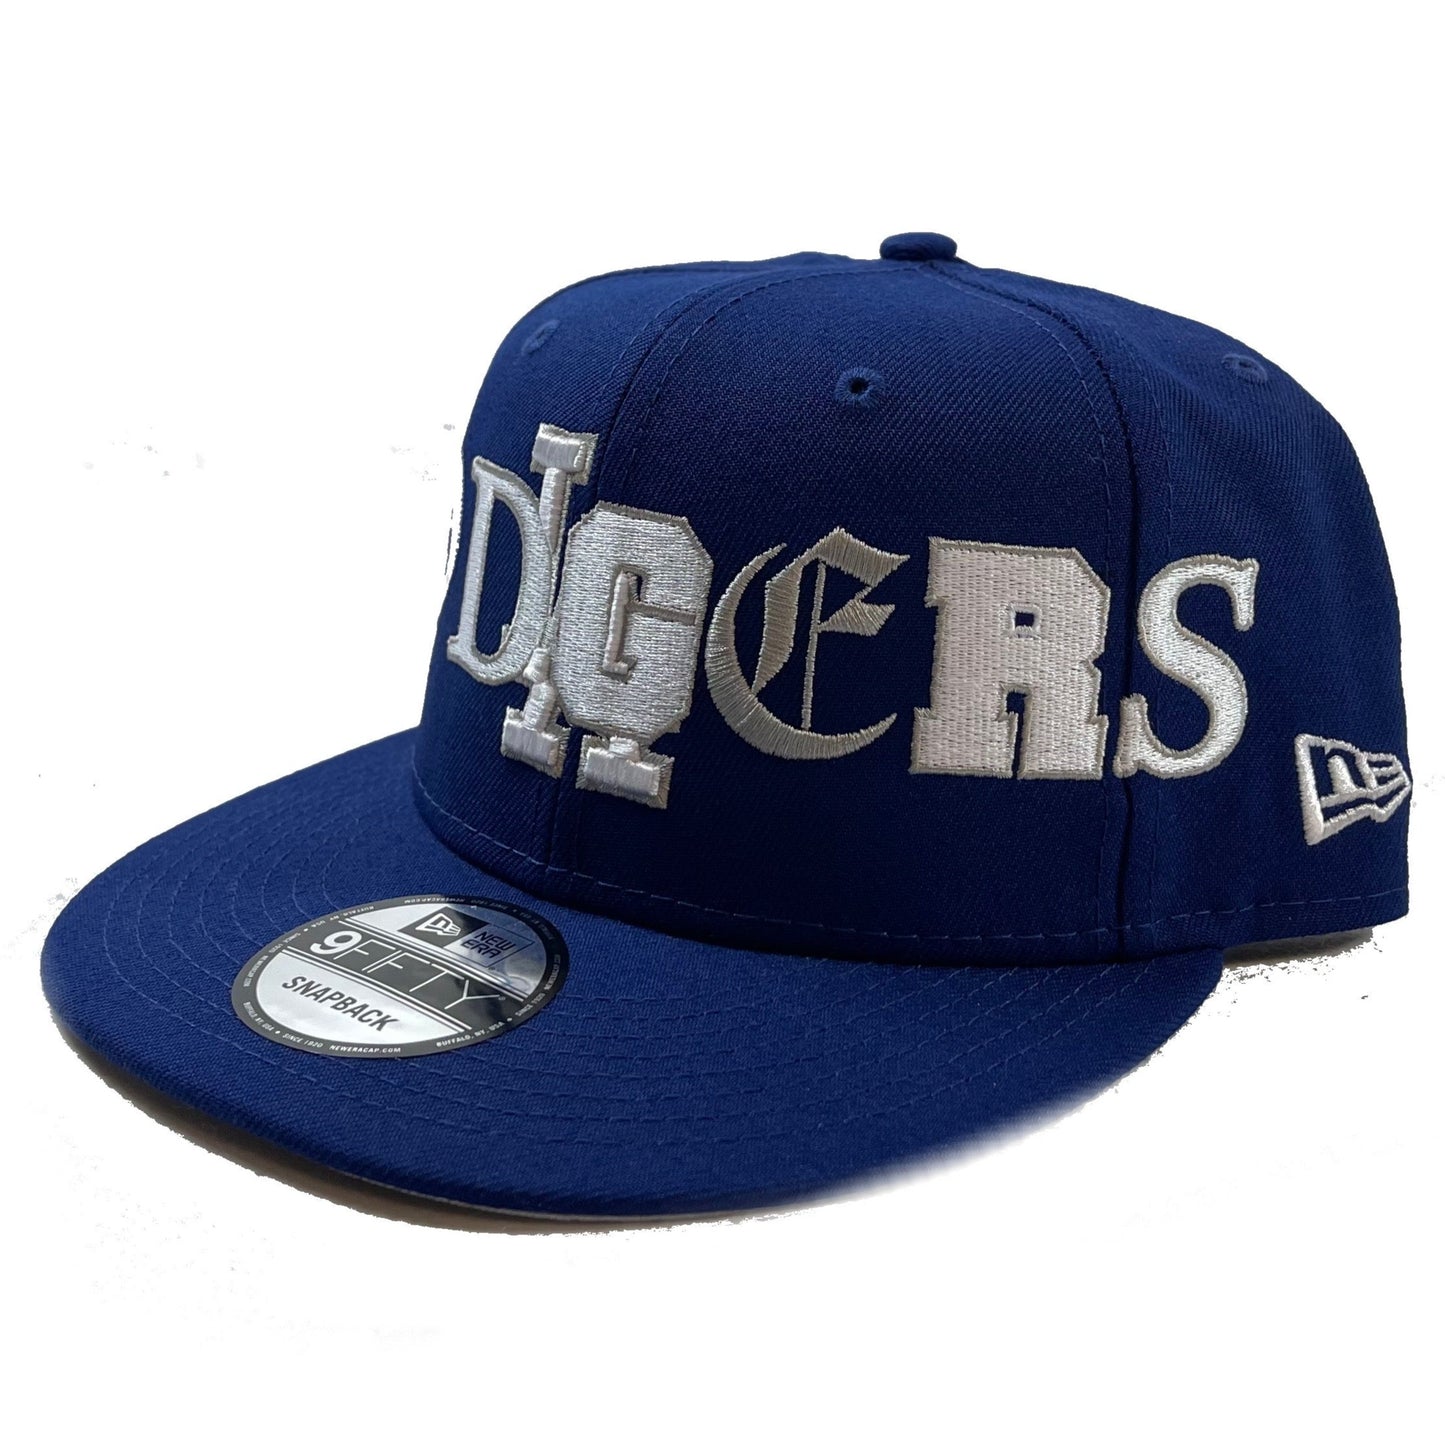 Los Angeles Dodgers (Blue) Snapback